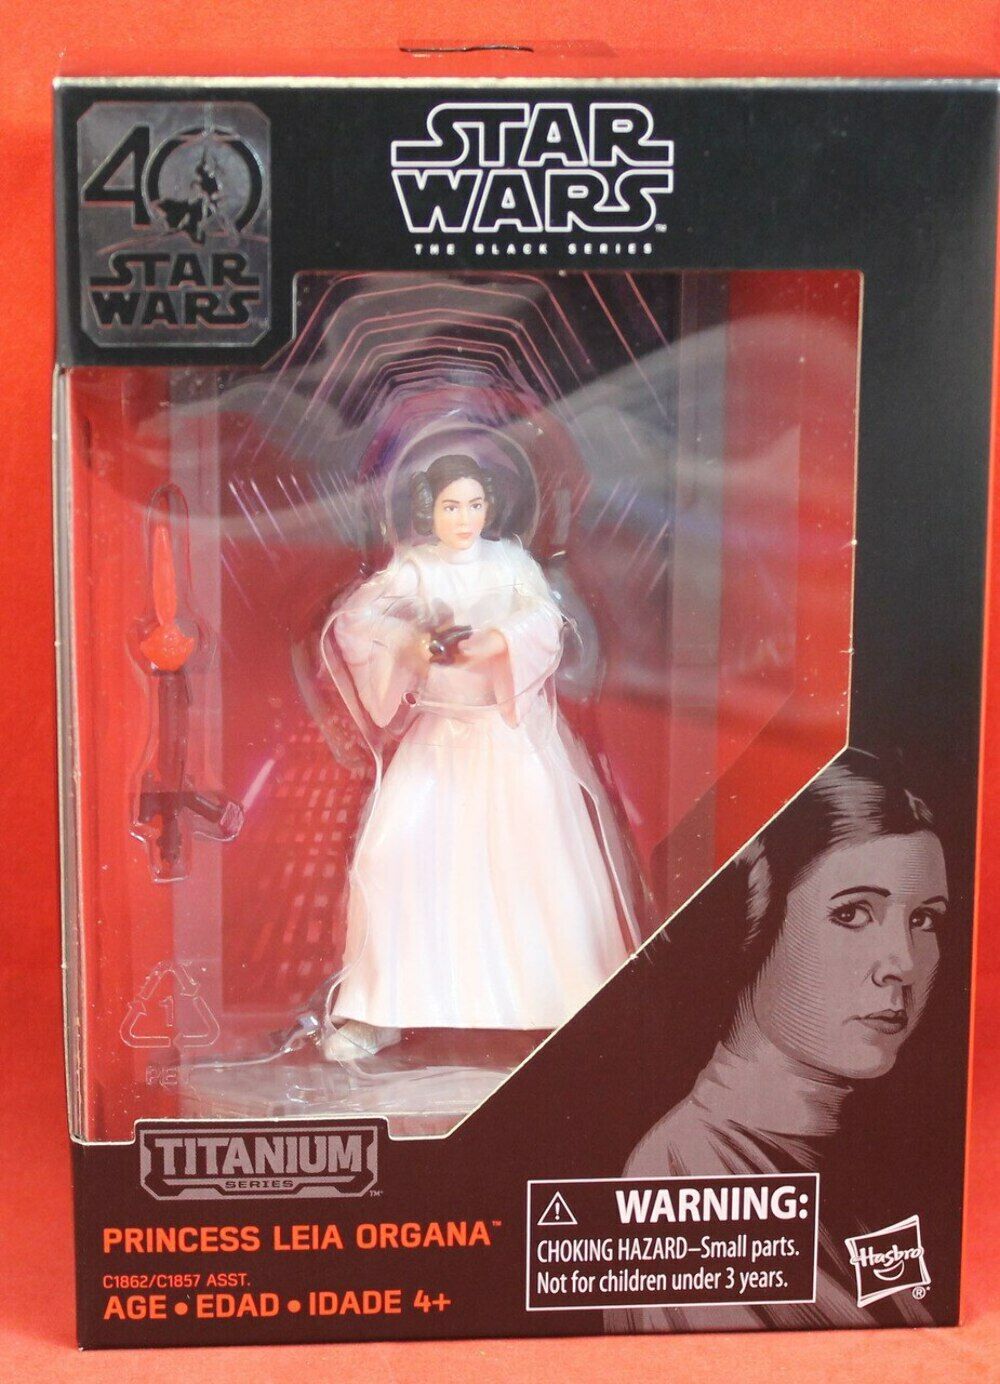 Star Wars 40th Anniversary Die Cast Metal Figures - 04 Princess Leia Organa